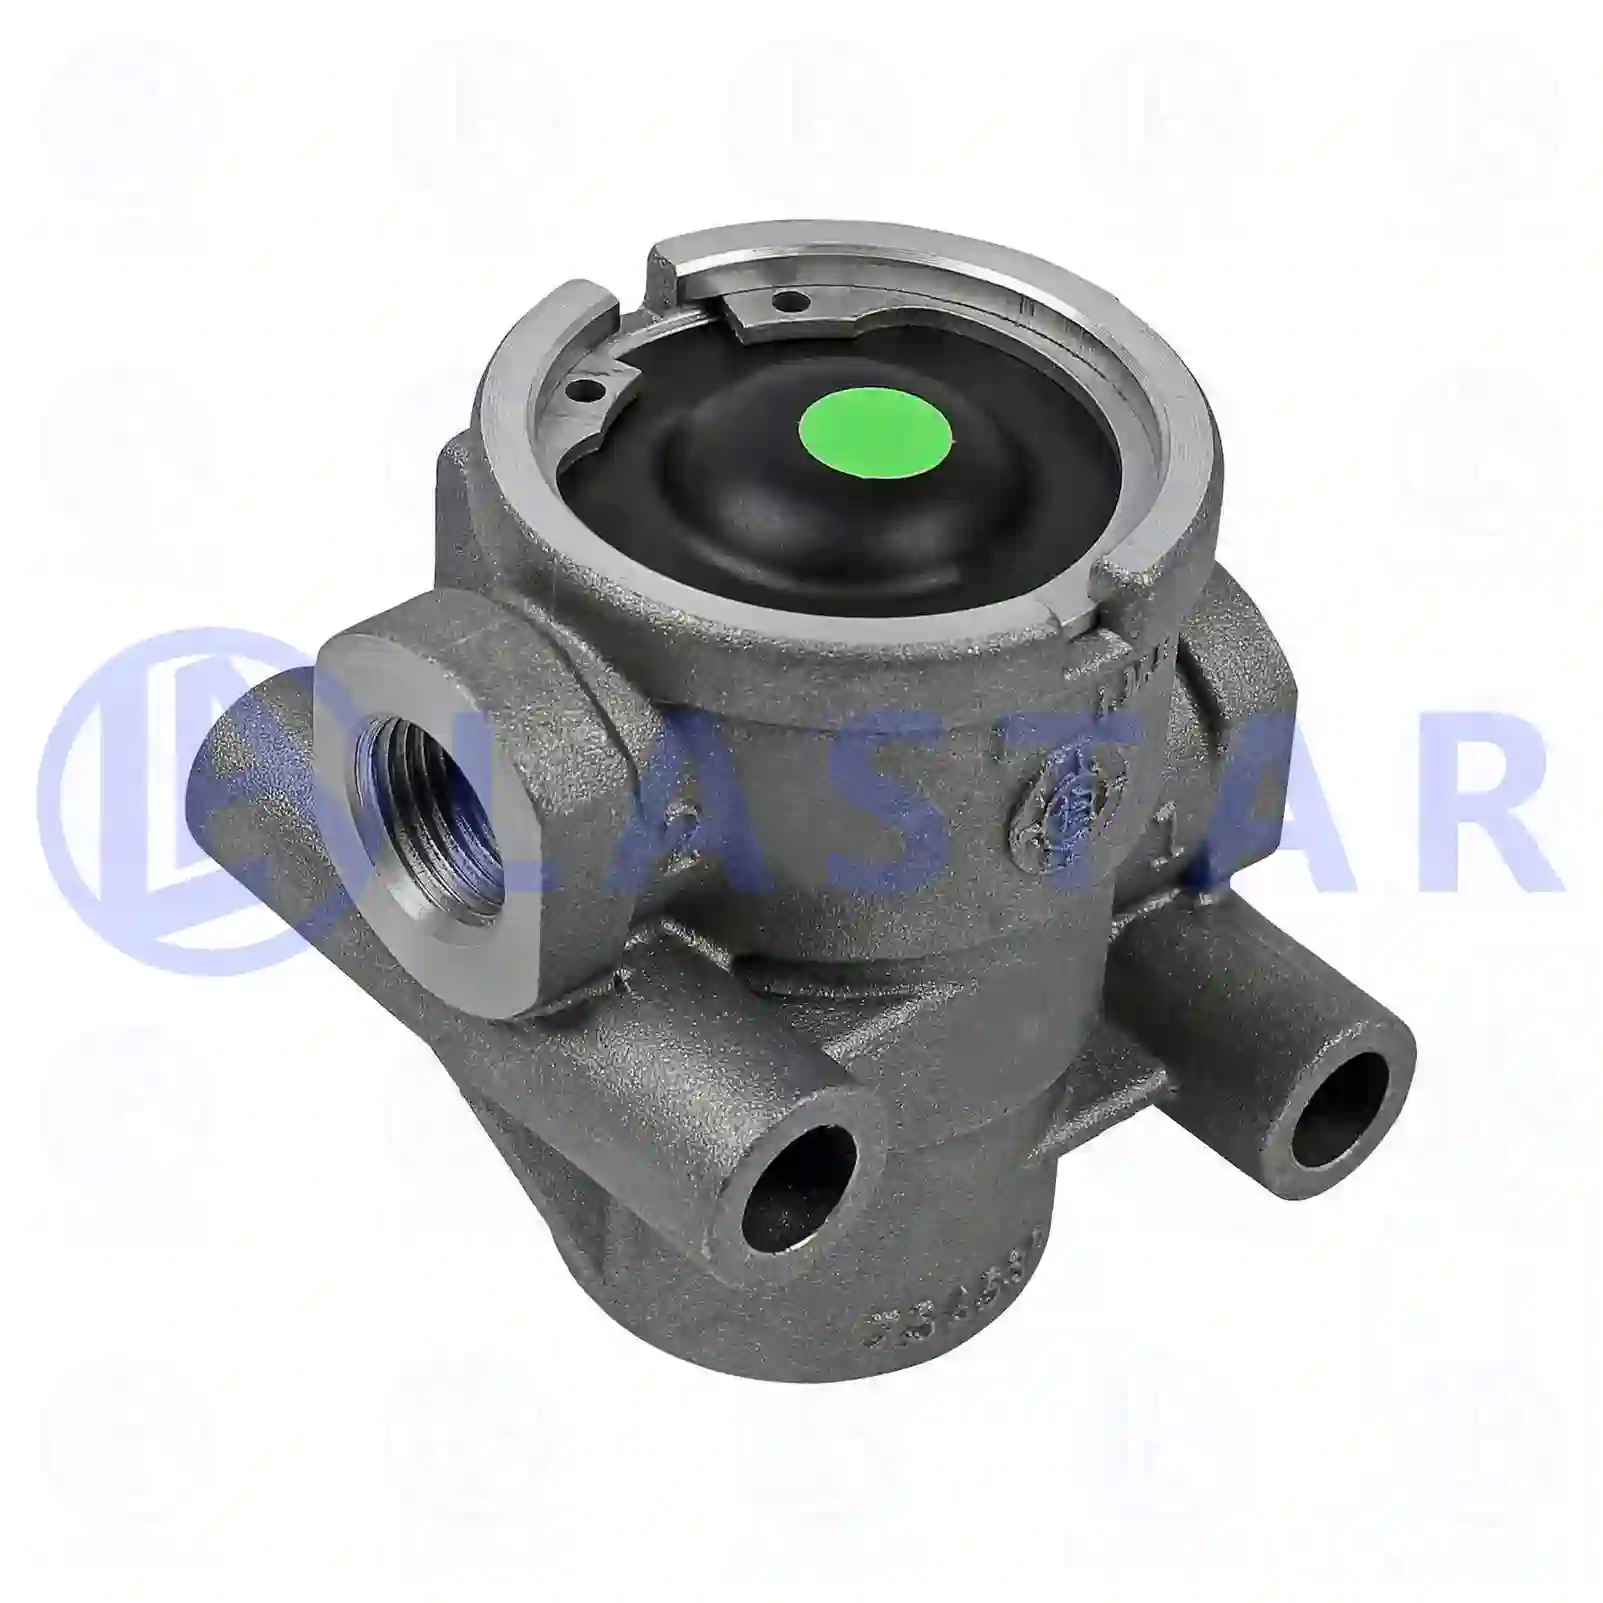  Pressure limiting valve || Lastar Spare Part | Truck Spare Parts, Auotomotive Spare Parts